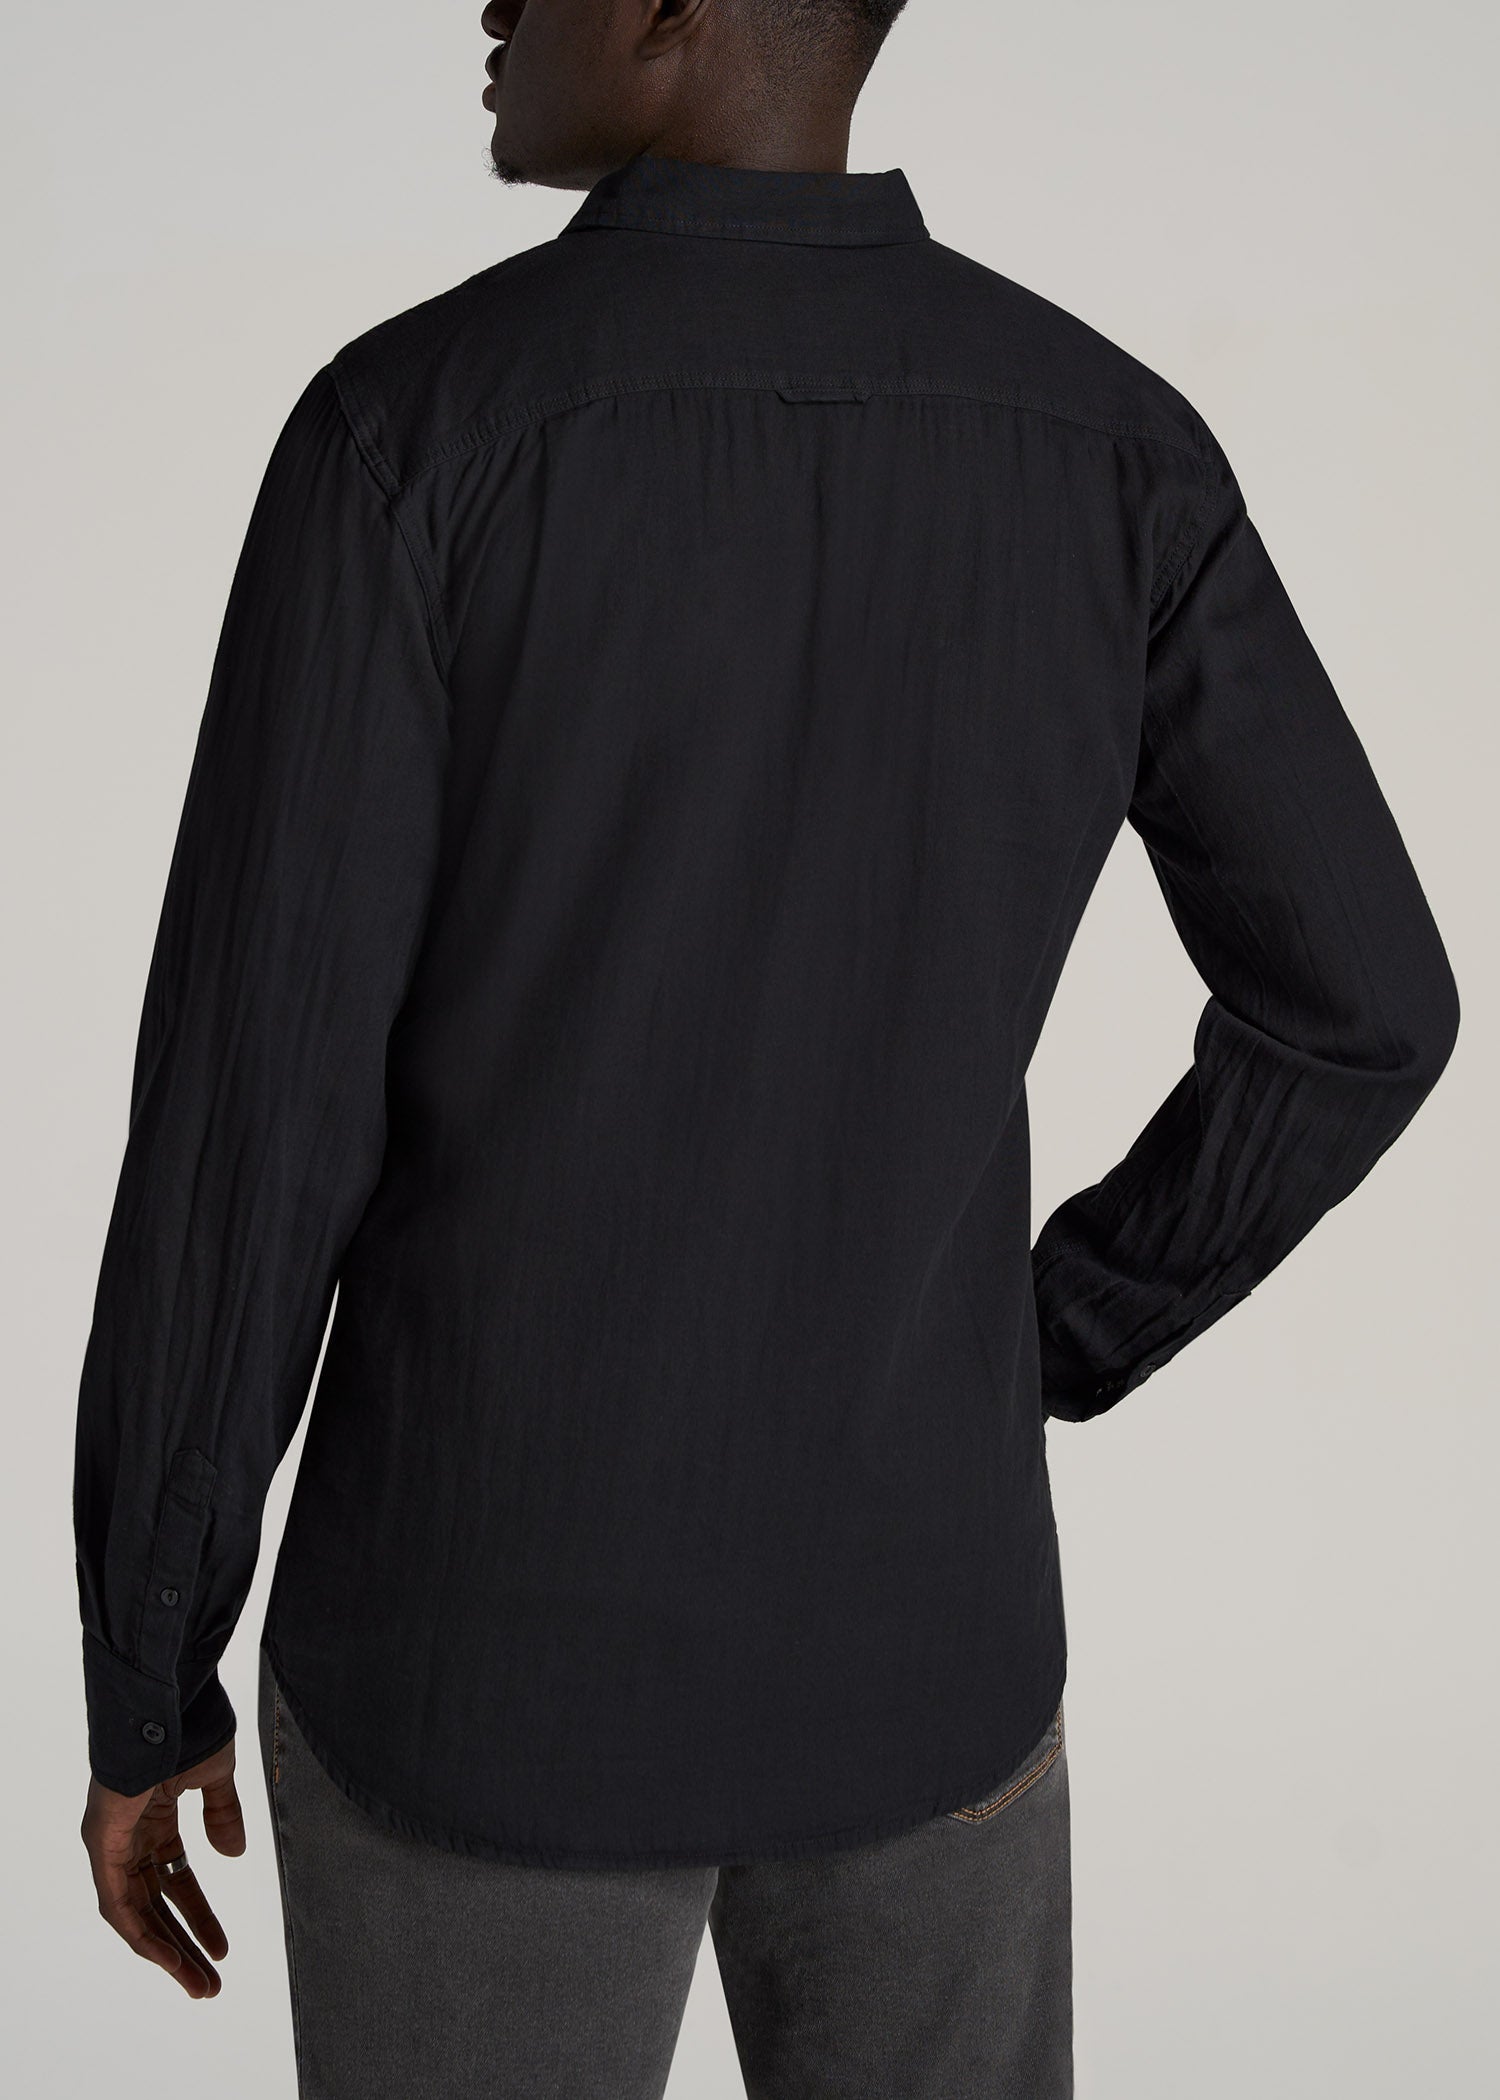 LJ&S Double Weave Shirt for Tall Men in Vintage Black